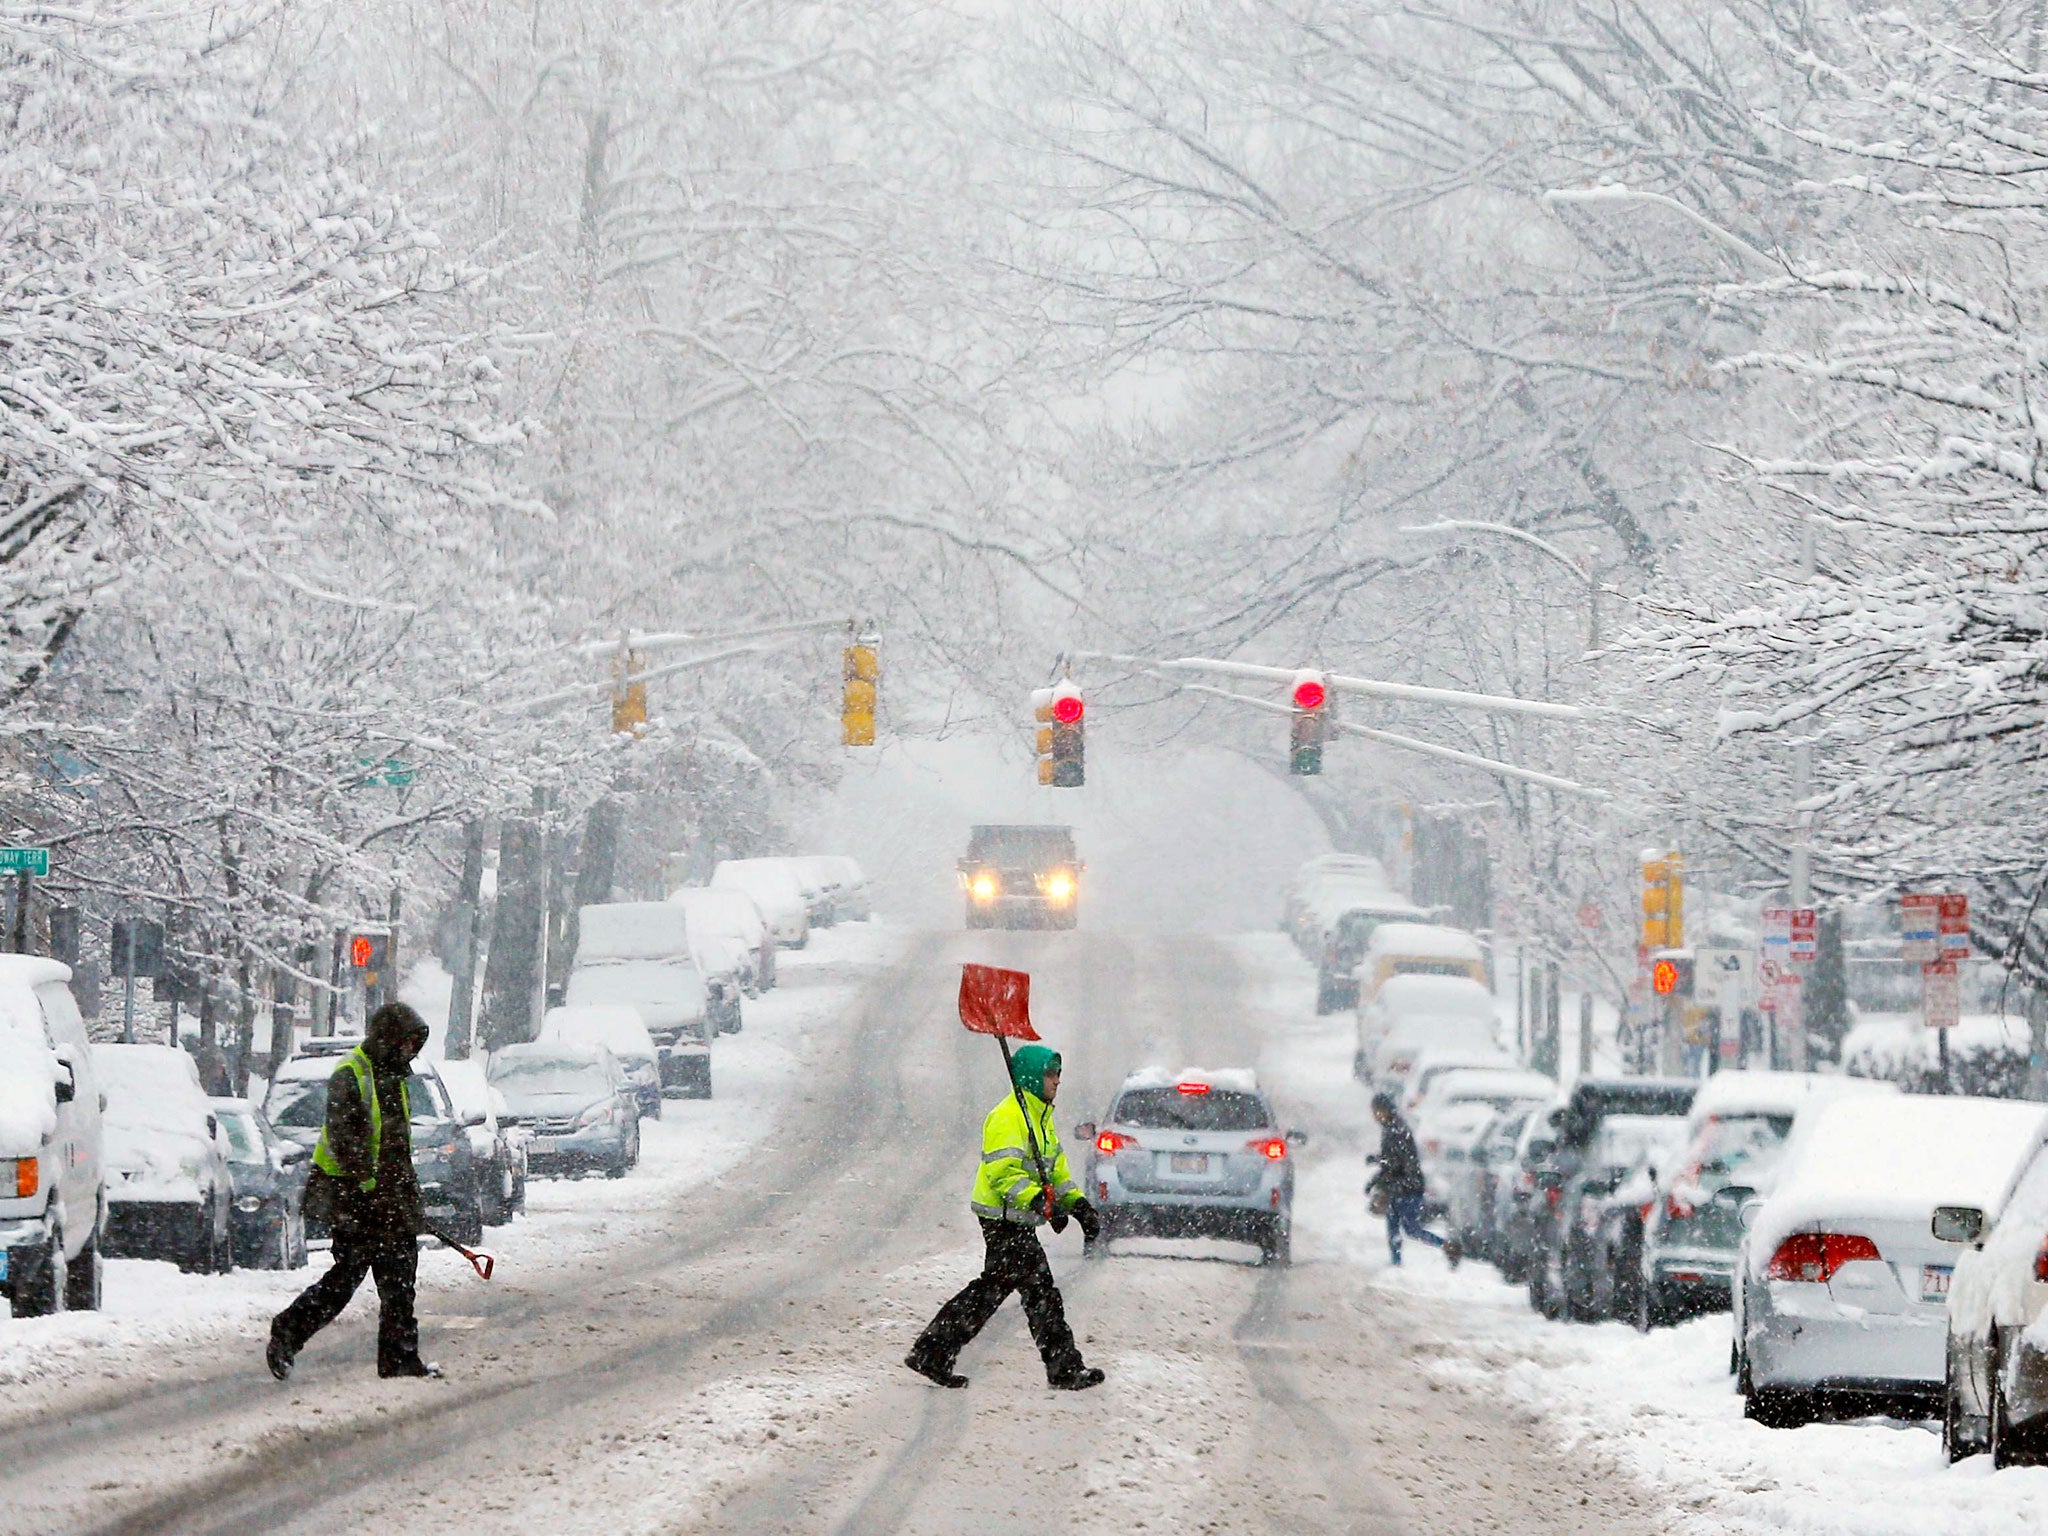 A snow shoveler crosses a street during a winter snowstorm in Cambridge, Massachusetts